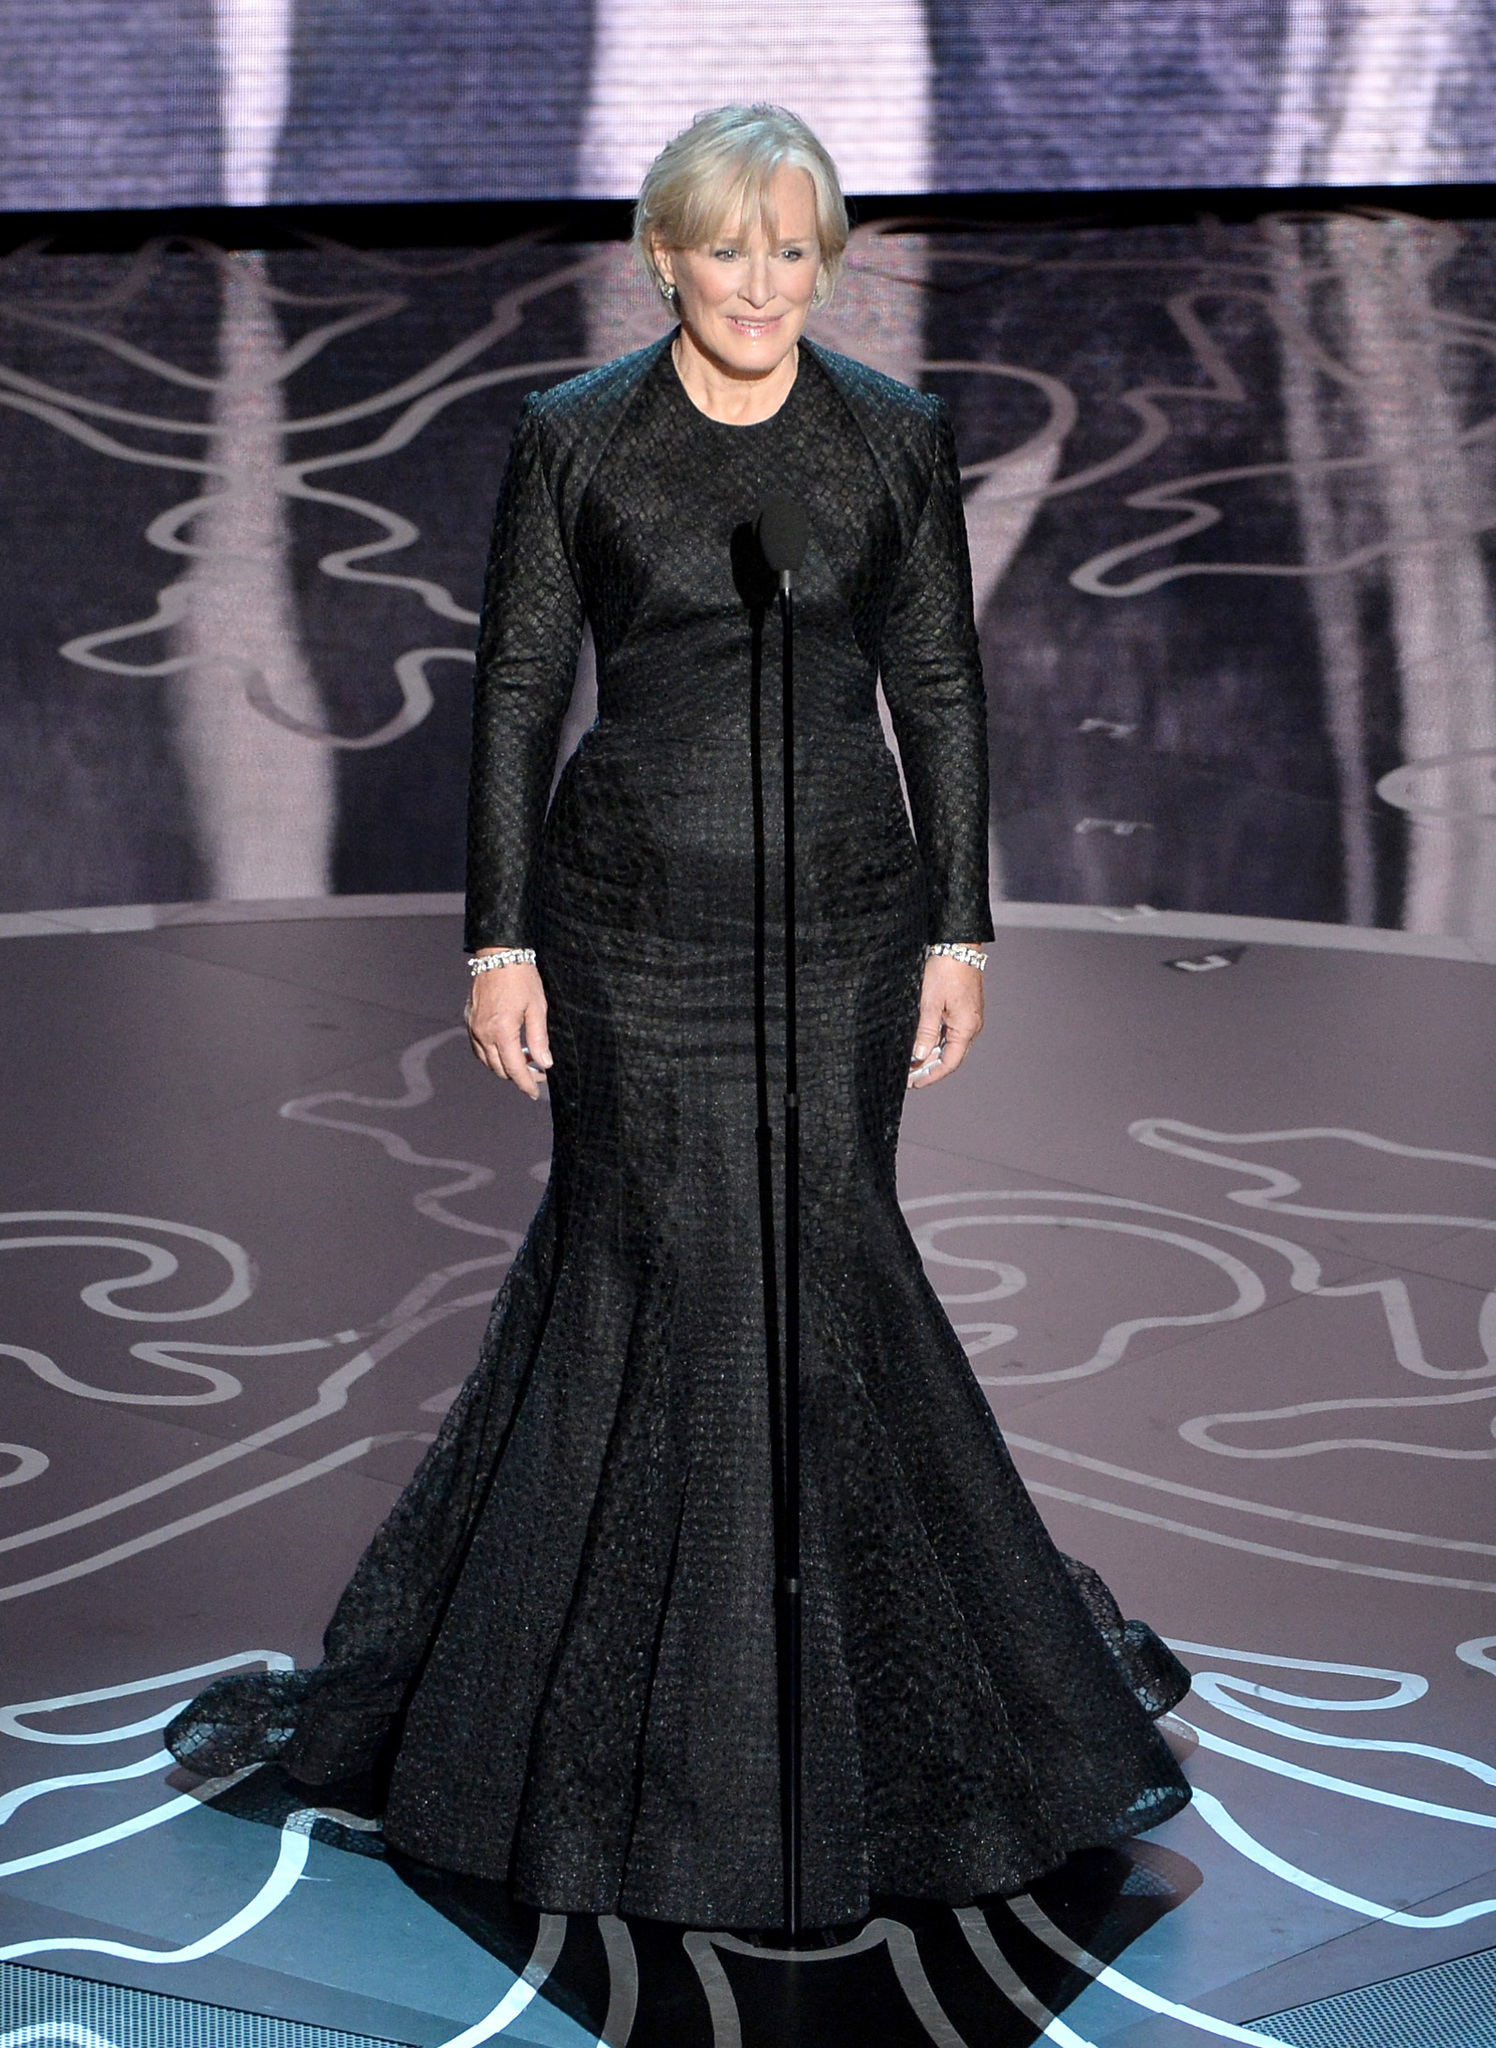 Glenn Close at event of The Oscars (2014)